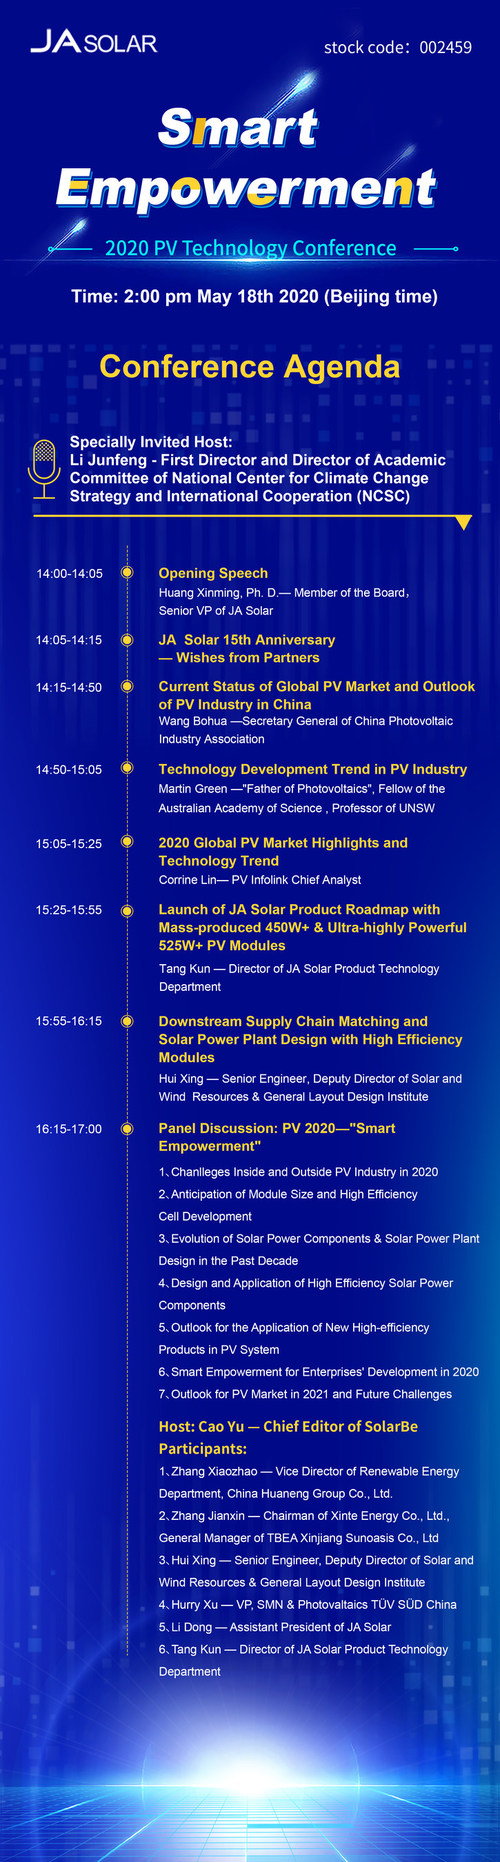 Agenda de la conferencia (PRNewsfoto/JA Solar Co., Ltd.)